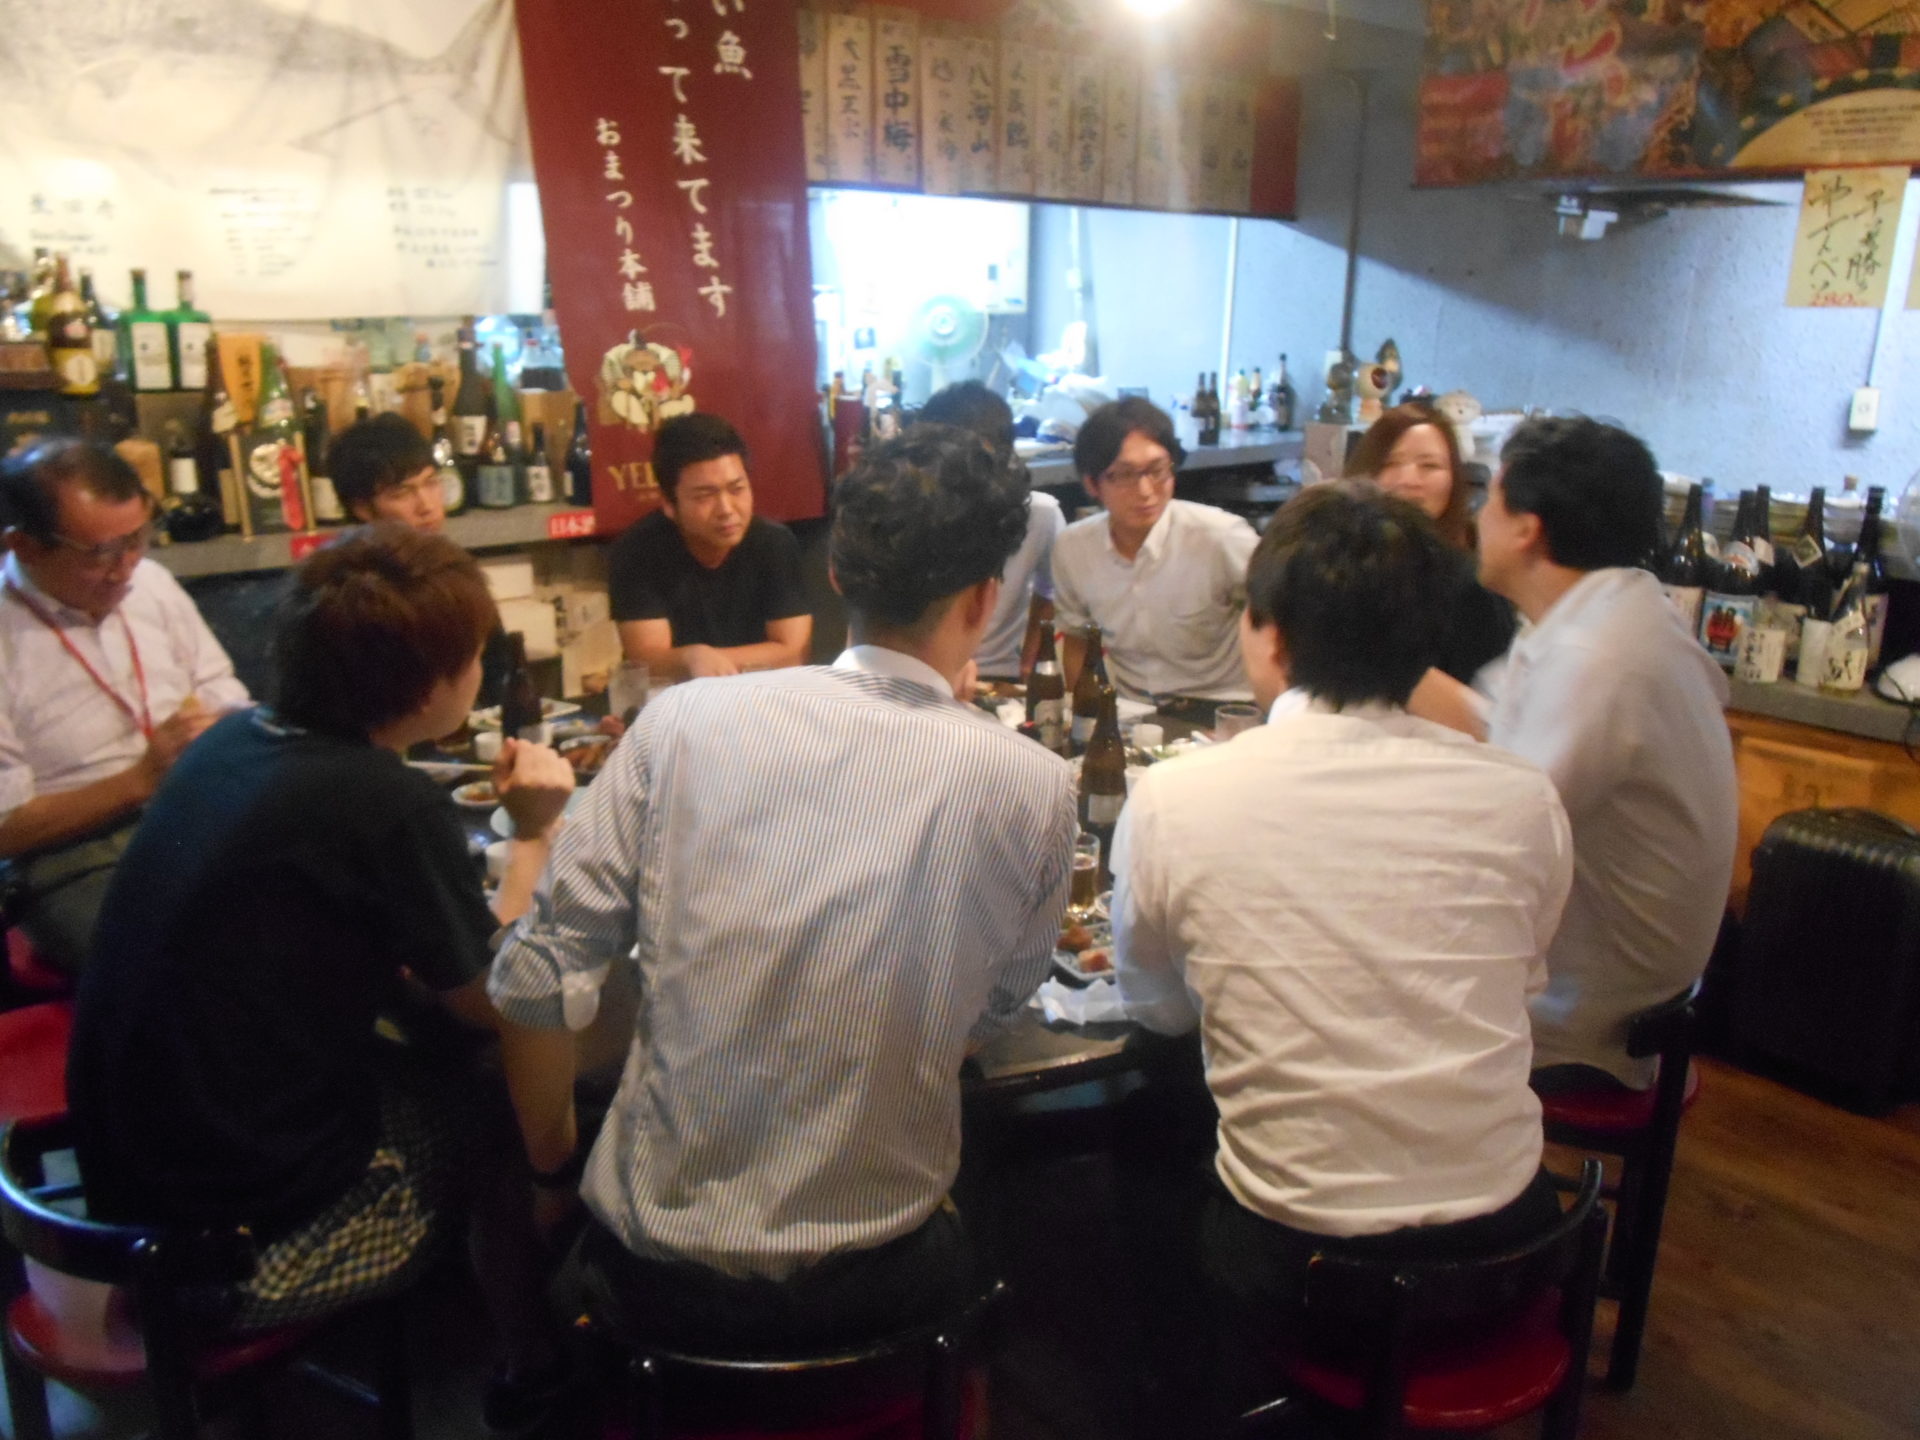 DSCN5611 1920x1440 - 2015年9月14日 AOsuki定例飲み会開催しました。